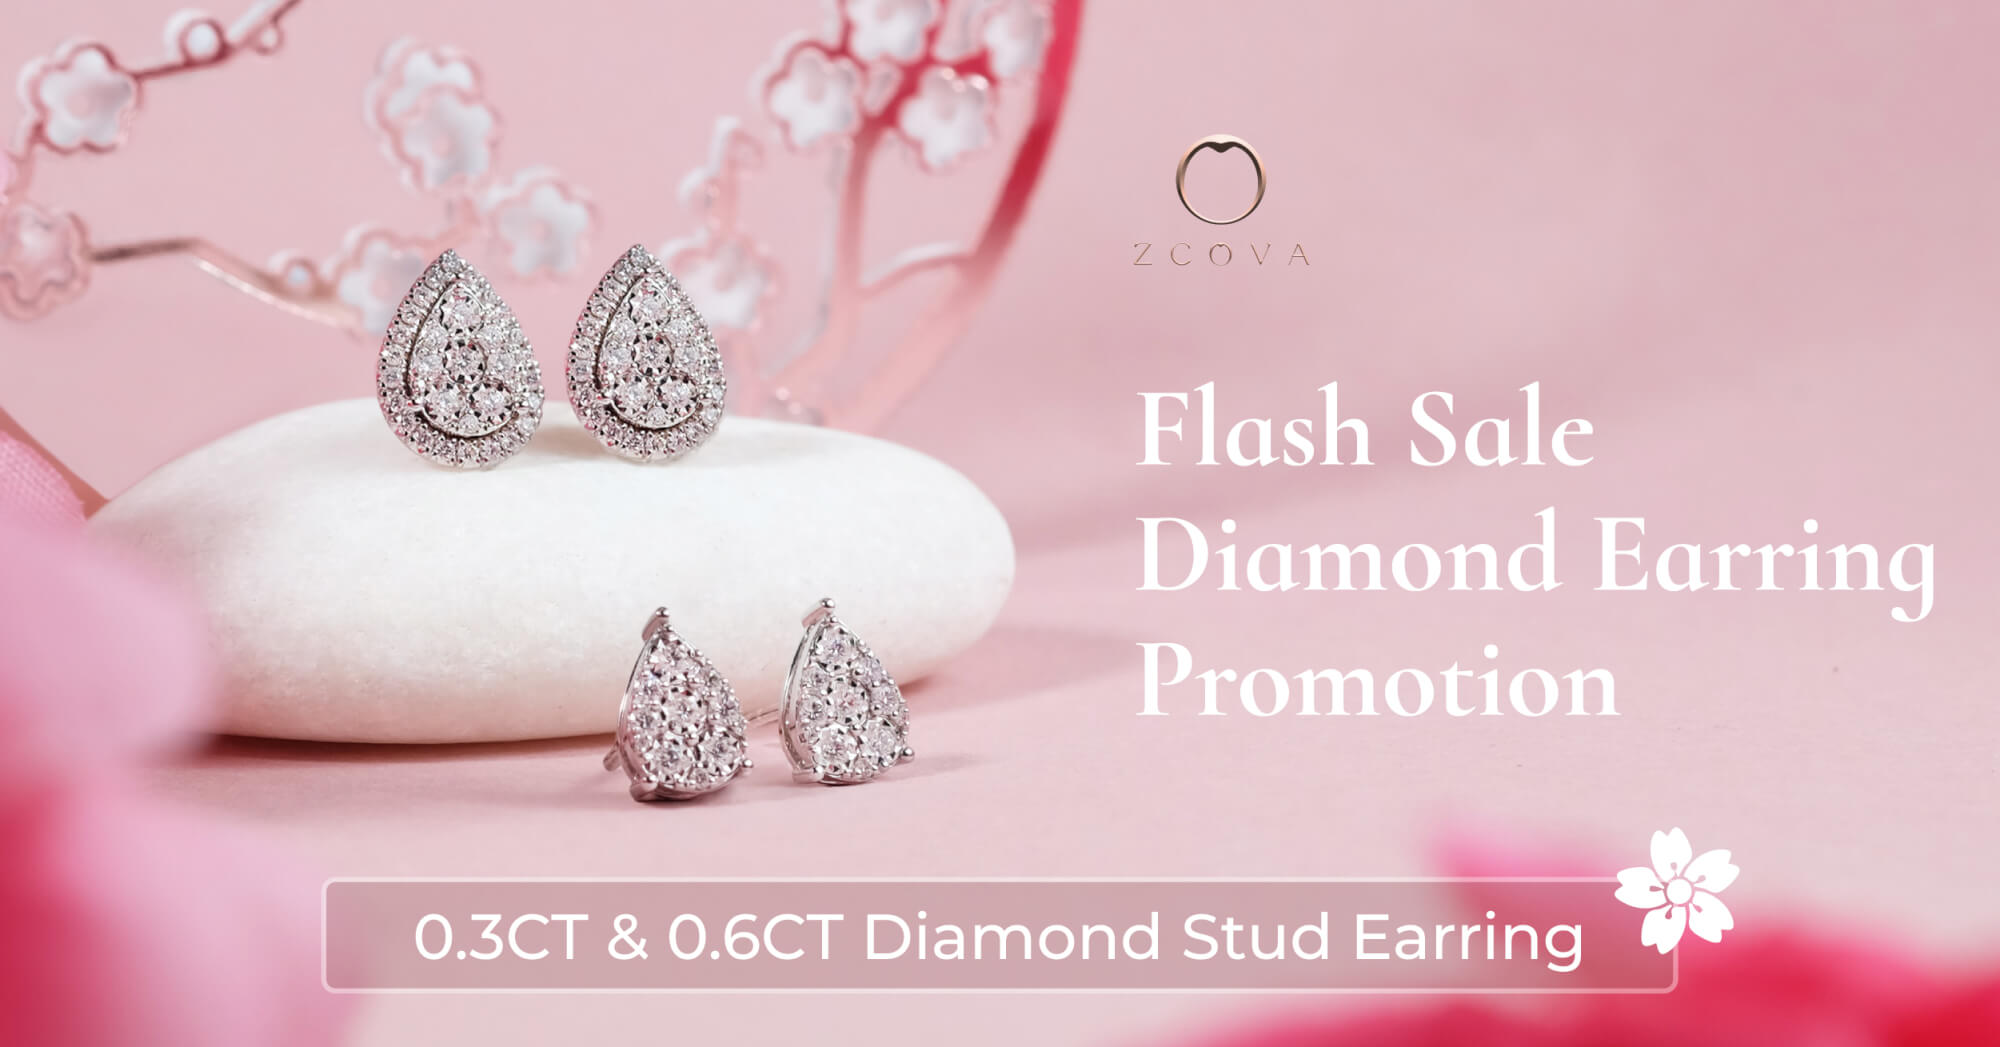 Flash sale Diamond Earring Promotion; 0.3CT diamond earring & 0.6CT Diamond Earring